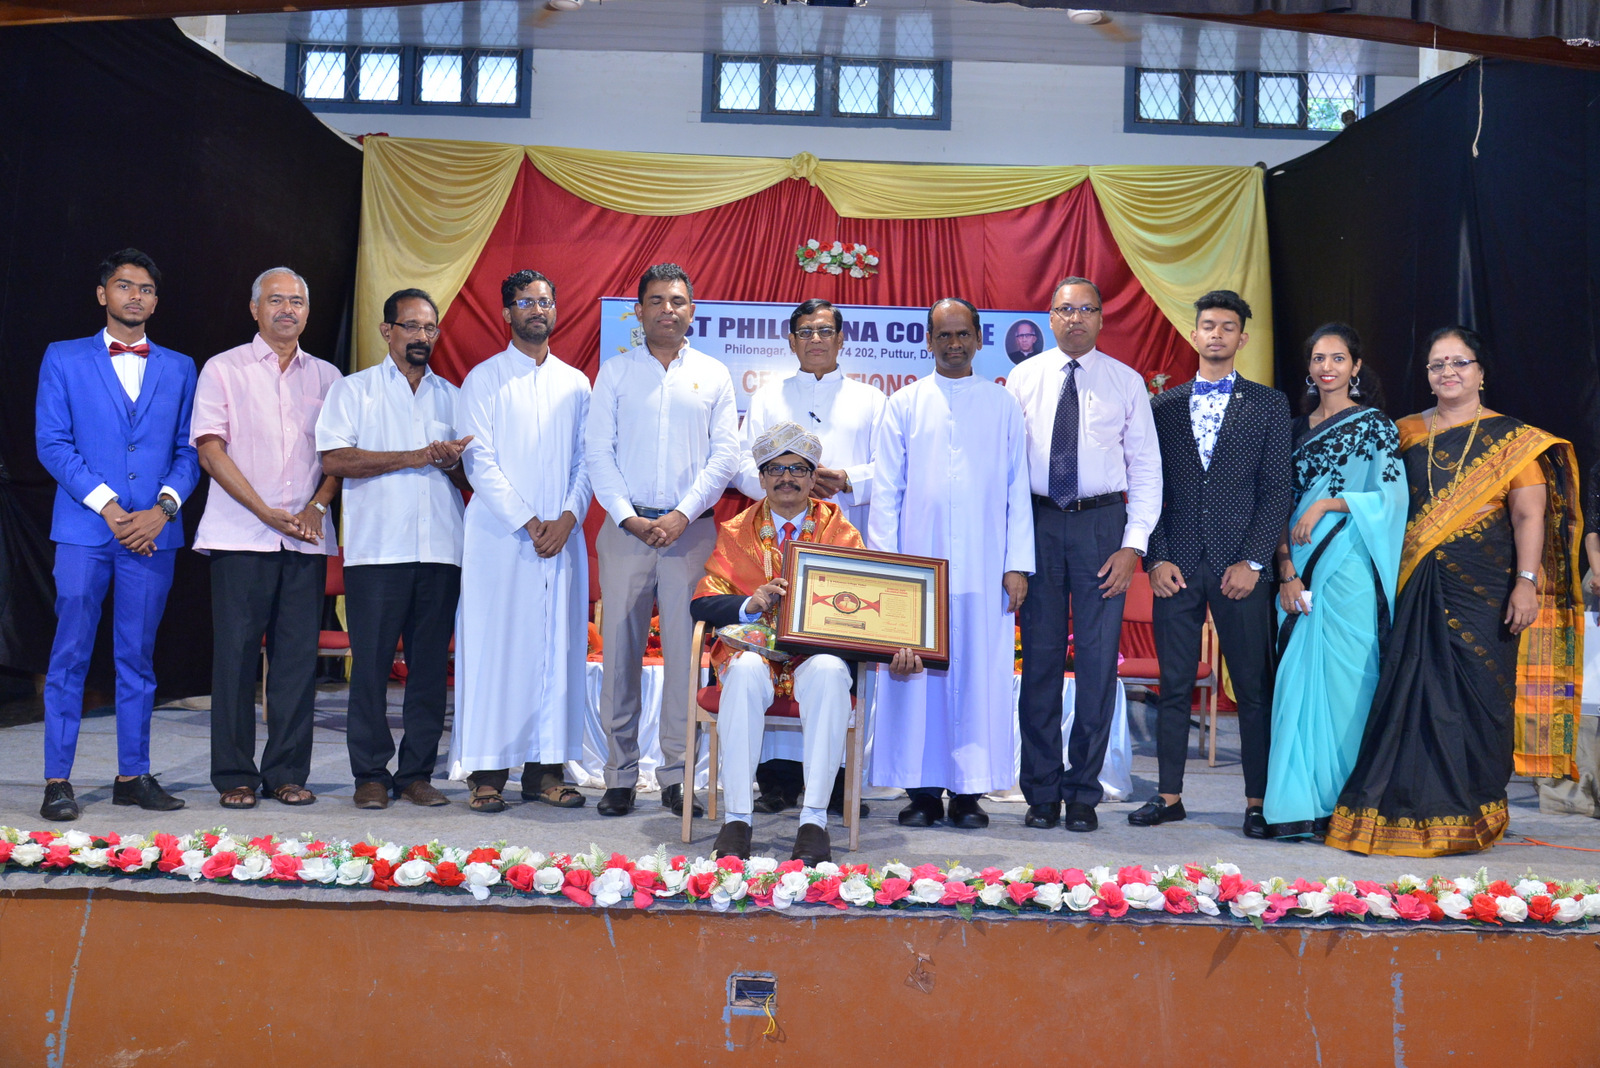 Annual Prathibha Day Celebration held at St Philomena College Puttur